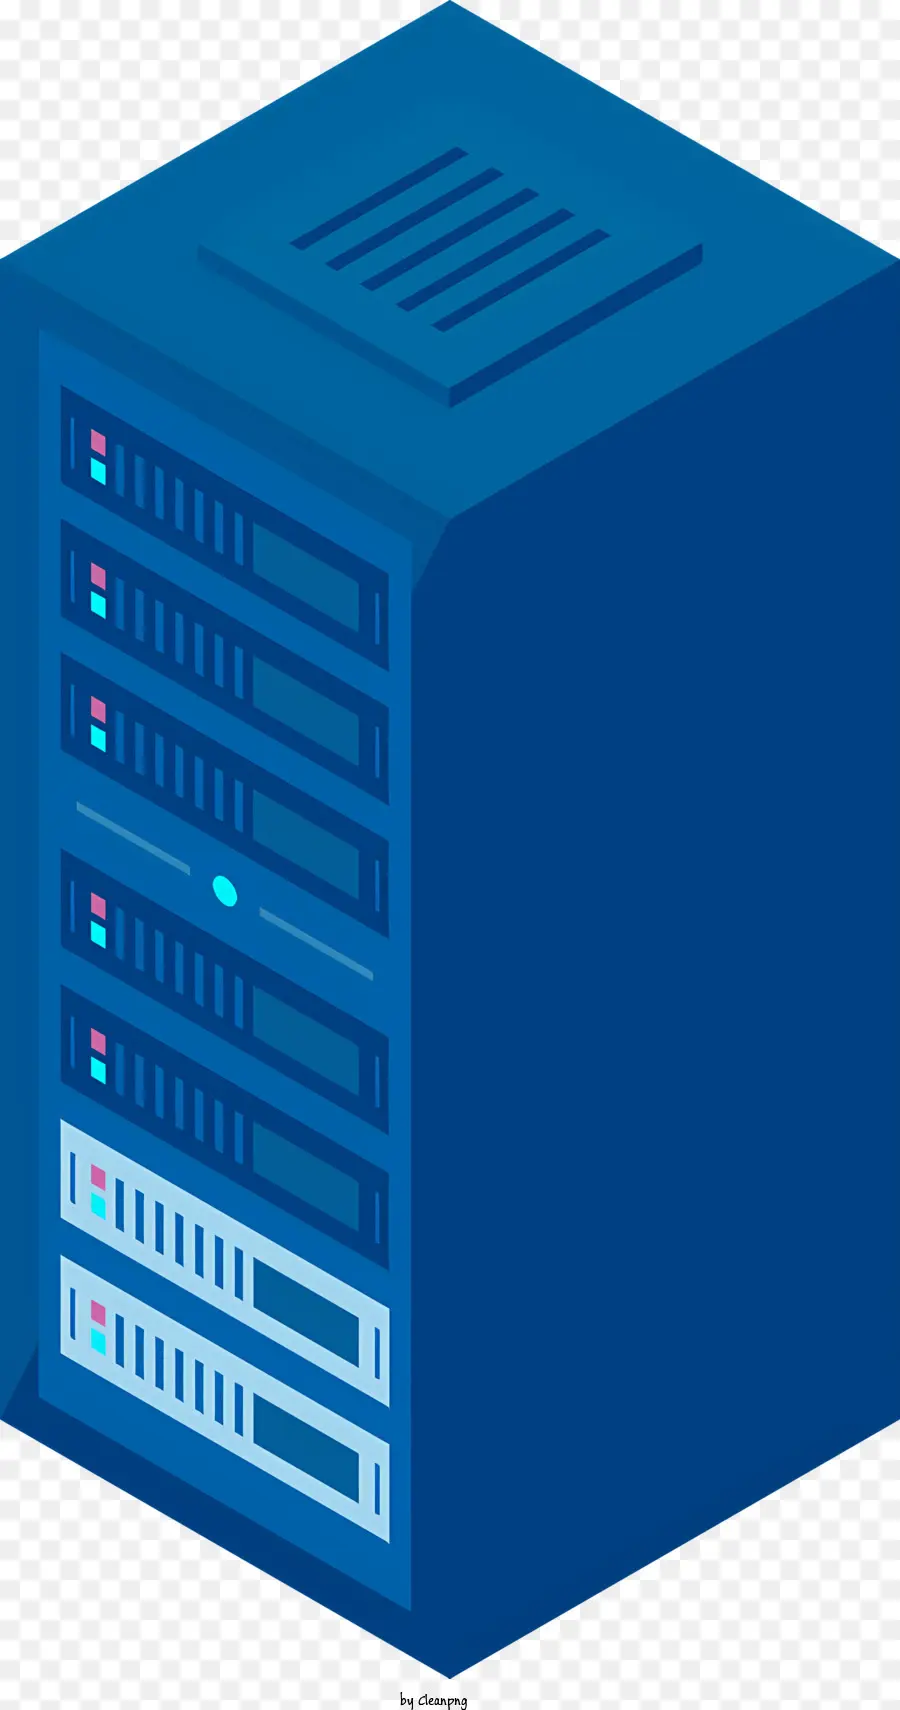 Icon Server Rack Blue Metal Server Rack Rack Zeile der Server schwarzer Bildschirm - Blue Metal -Server -Rack mit beleuchteten Servern